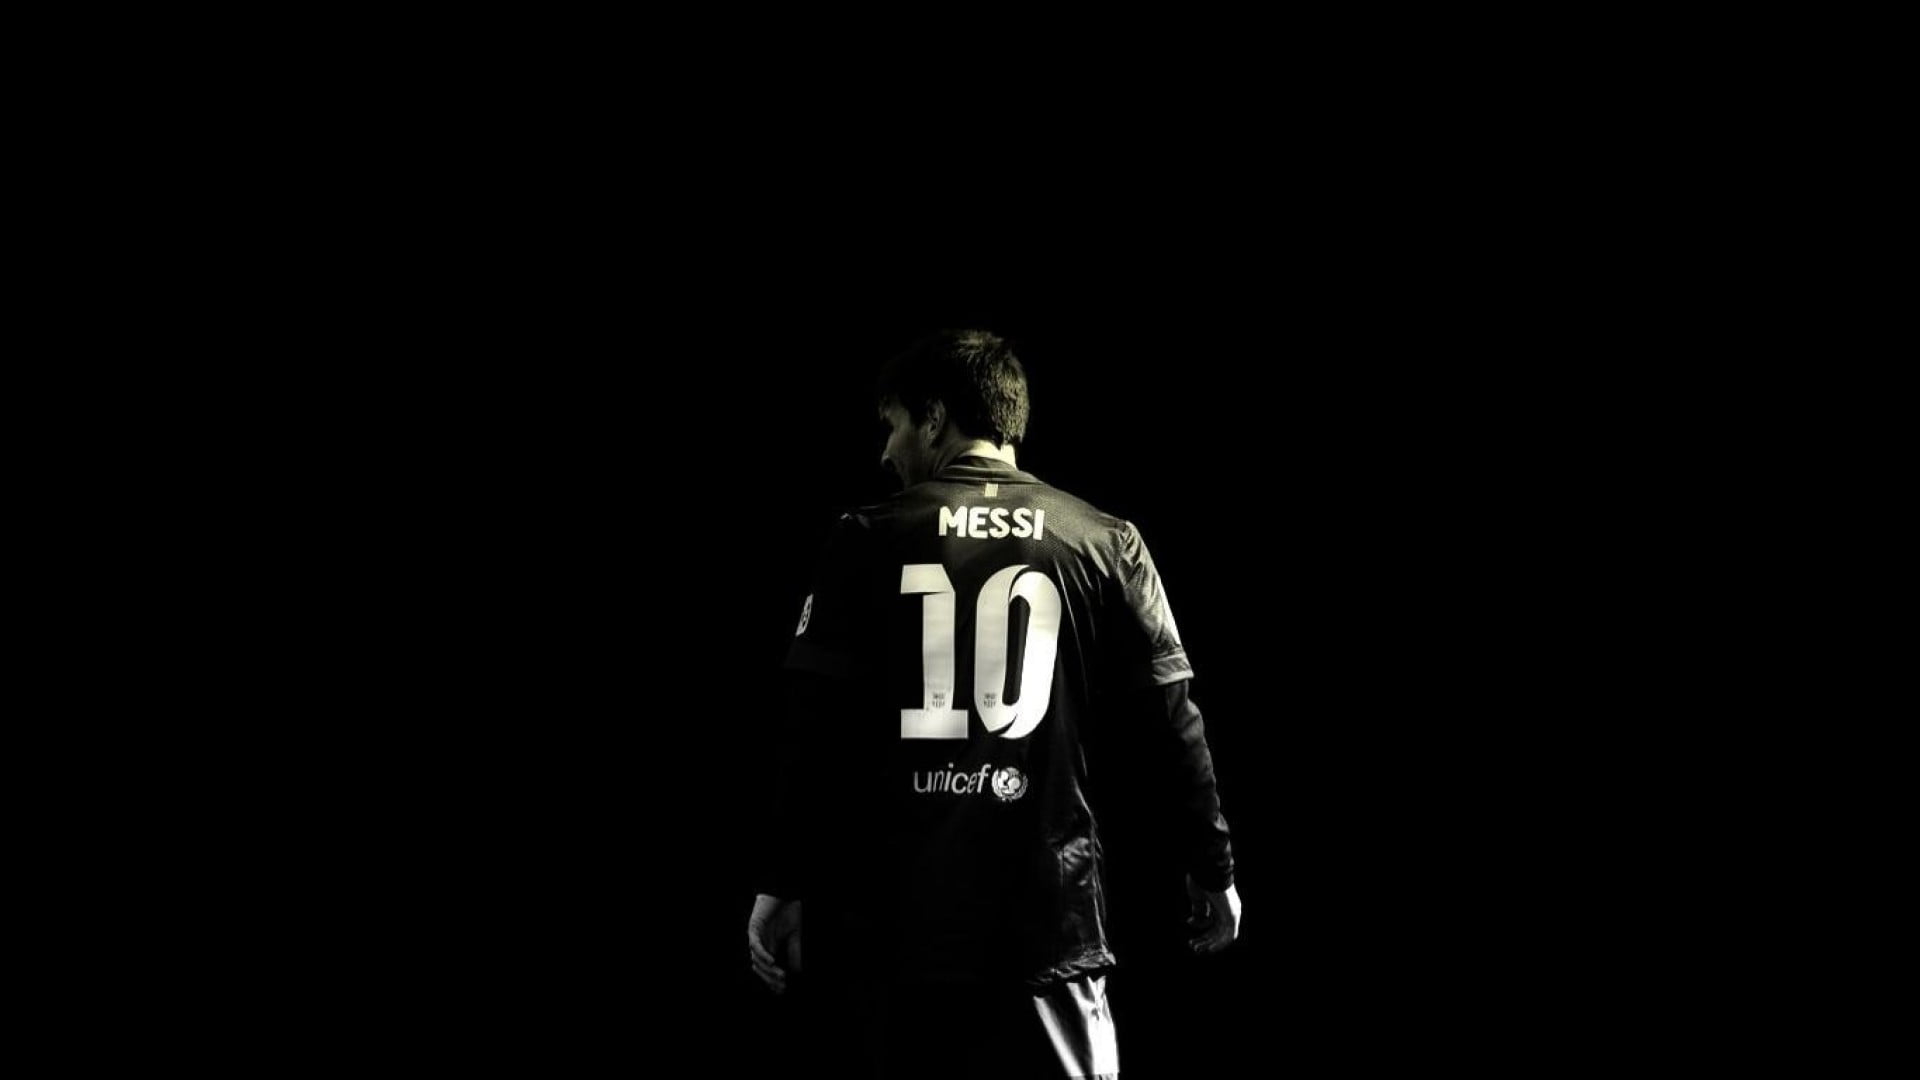 Ảnh nền Messi black color - all black